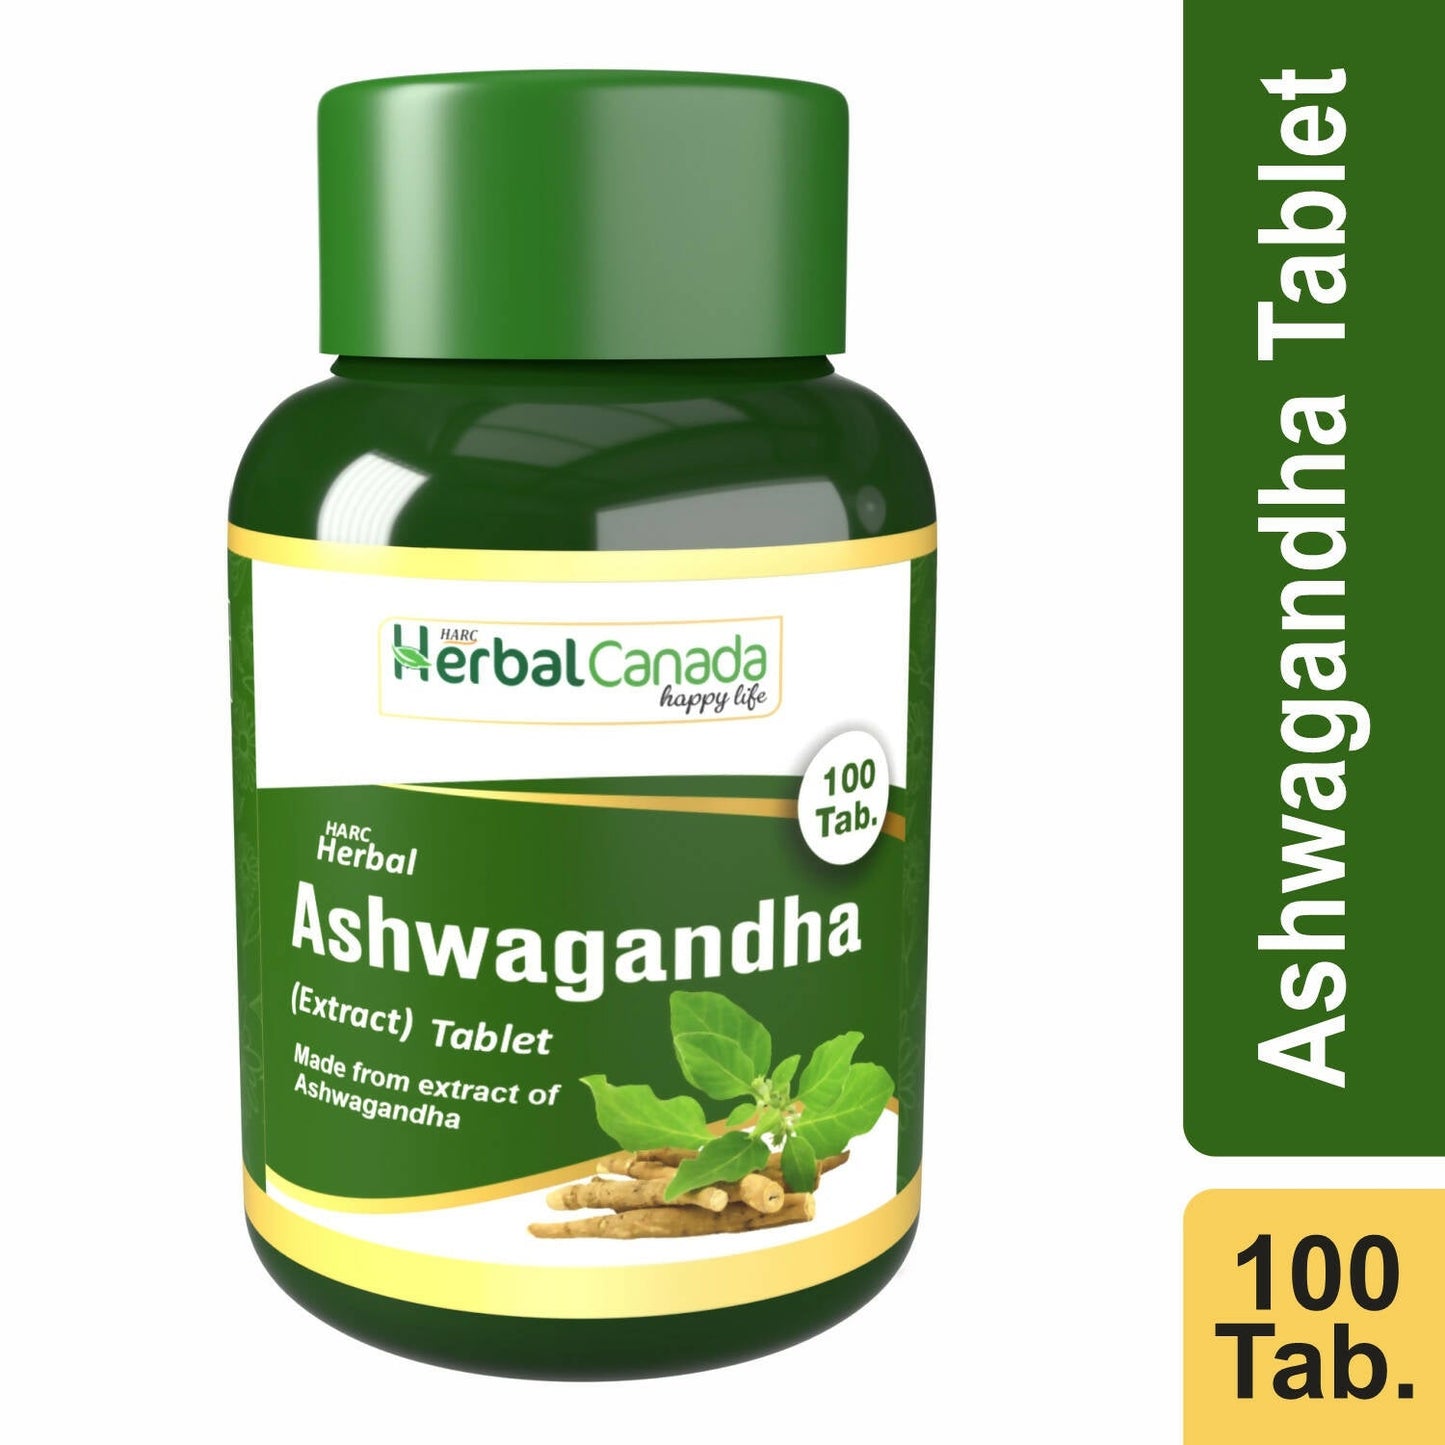 Herbal Canada Ashwagandha Extract Tablets